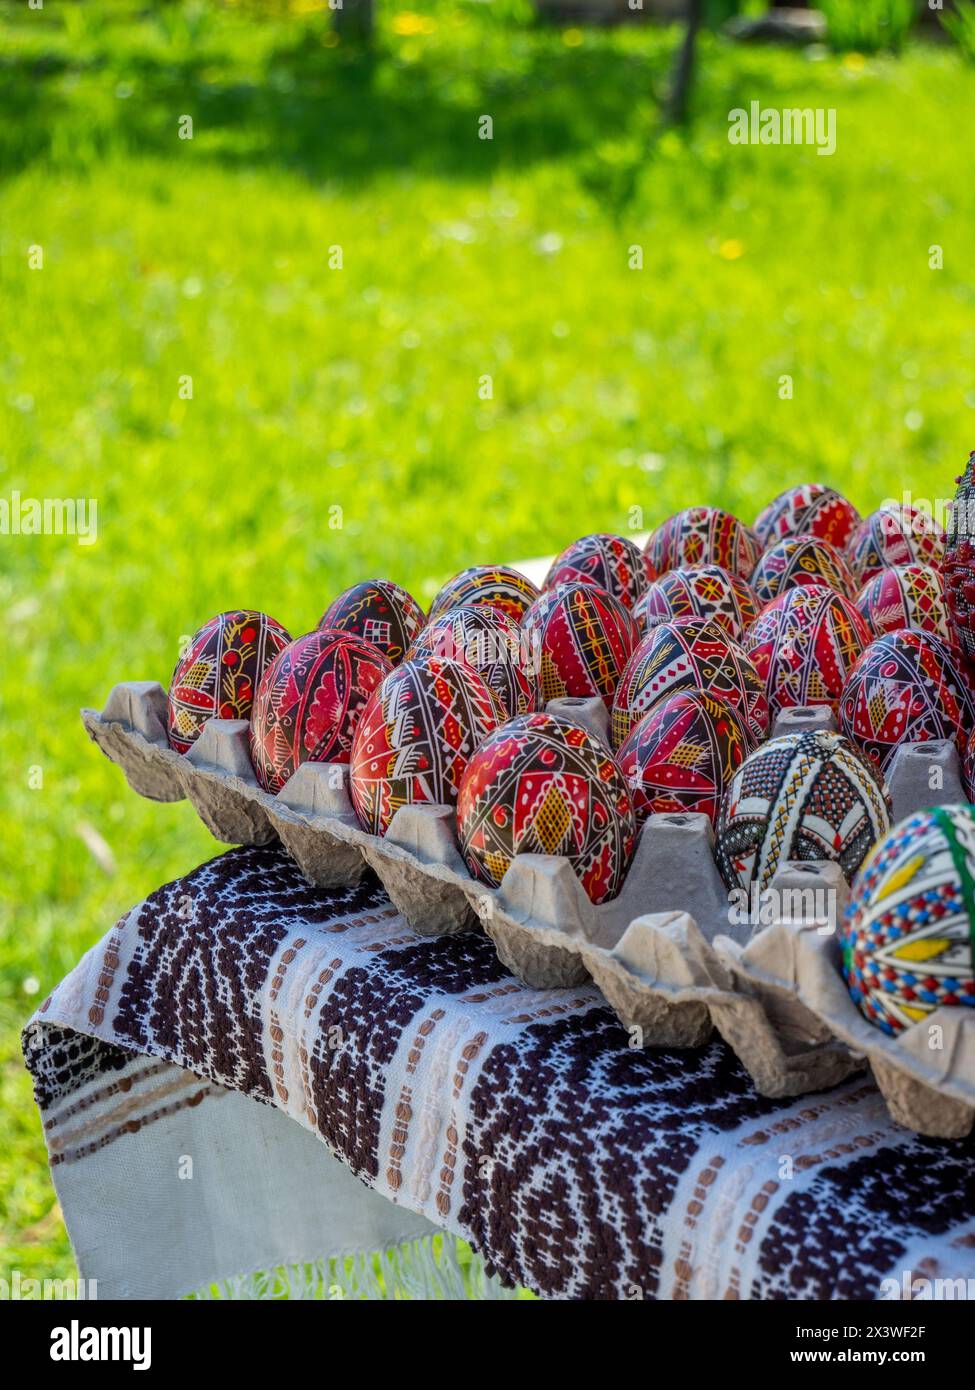 gruppo di uova di pasqua ortodosse rumene decorate in mostra Foto Stock